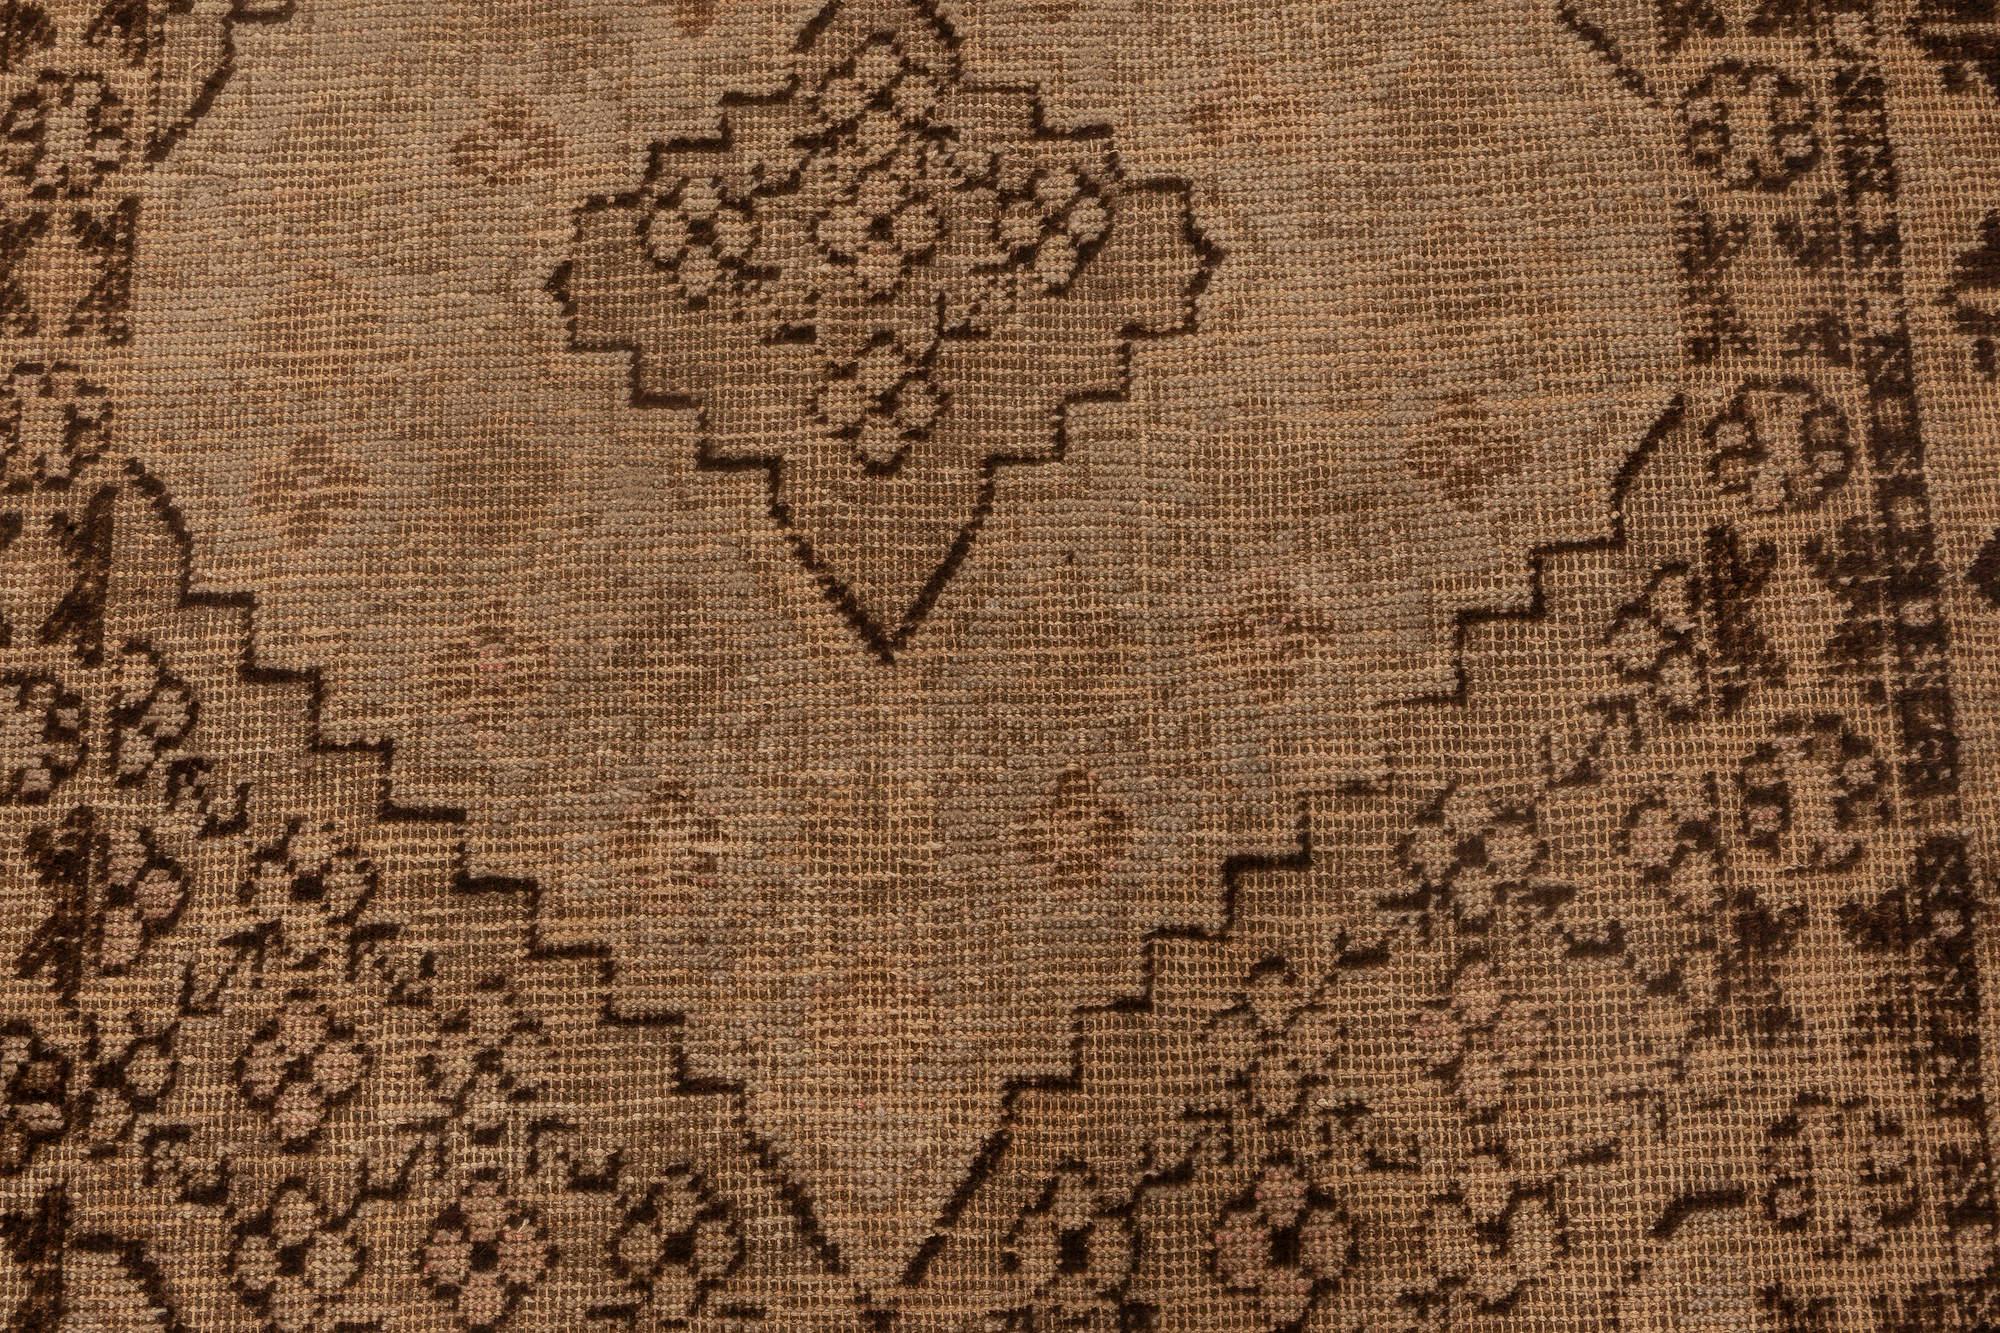 Midcentury Samarkand handmade wool rug in beige and brown.
Size: 3'9